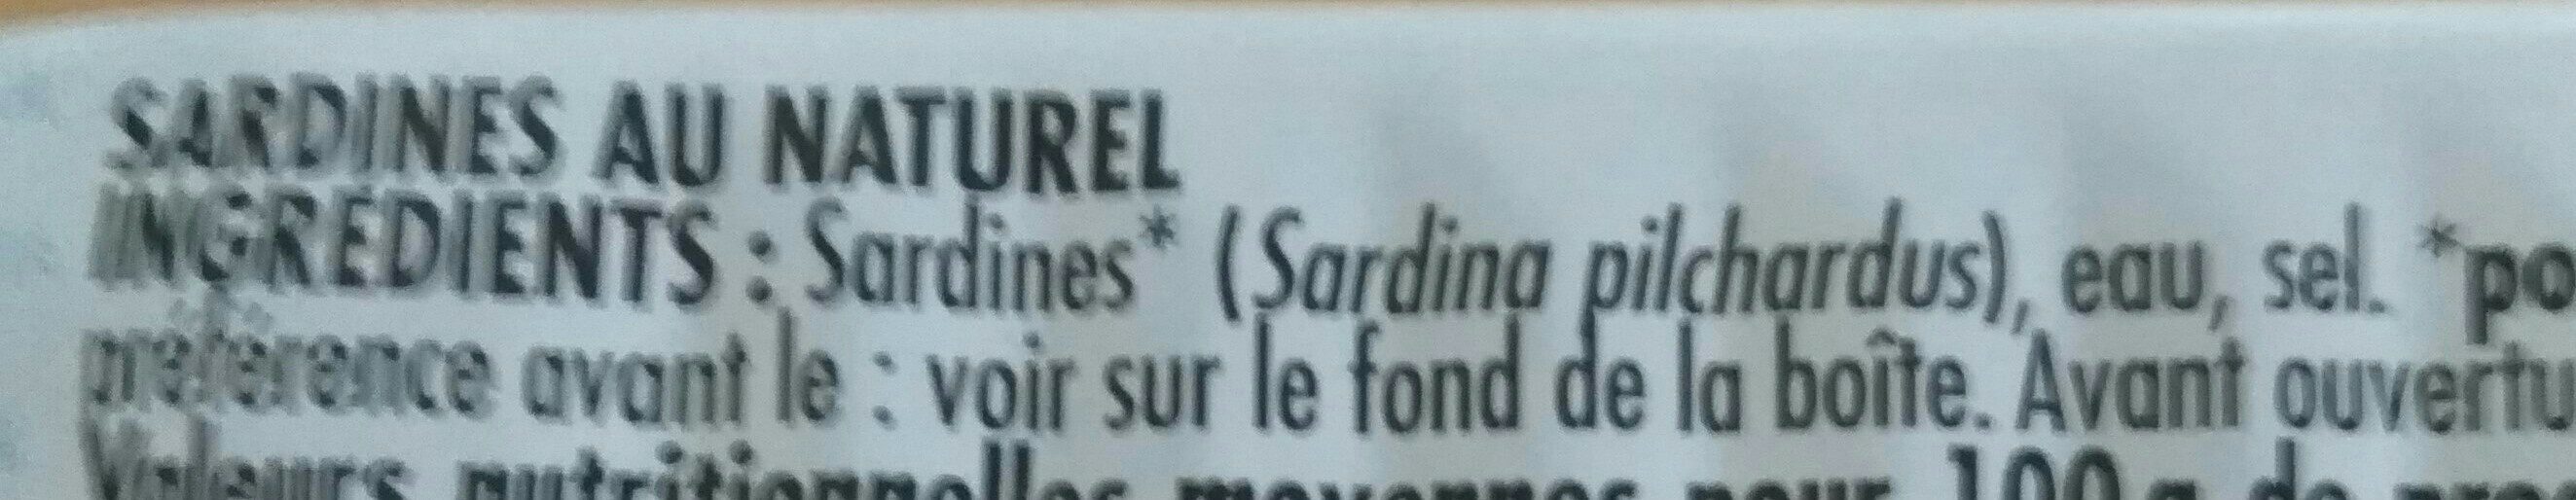 Sardines au naturel - Ingrédients - fr